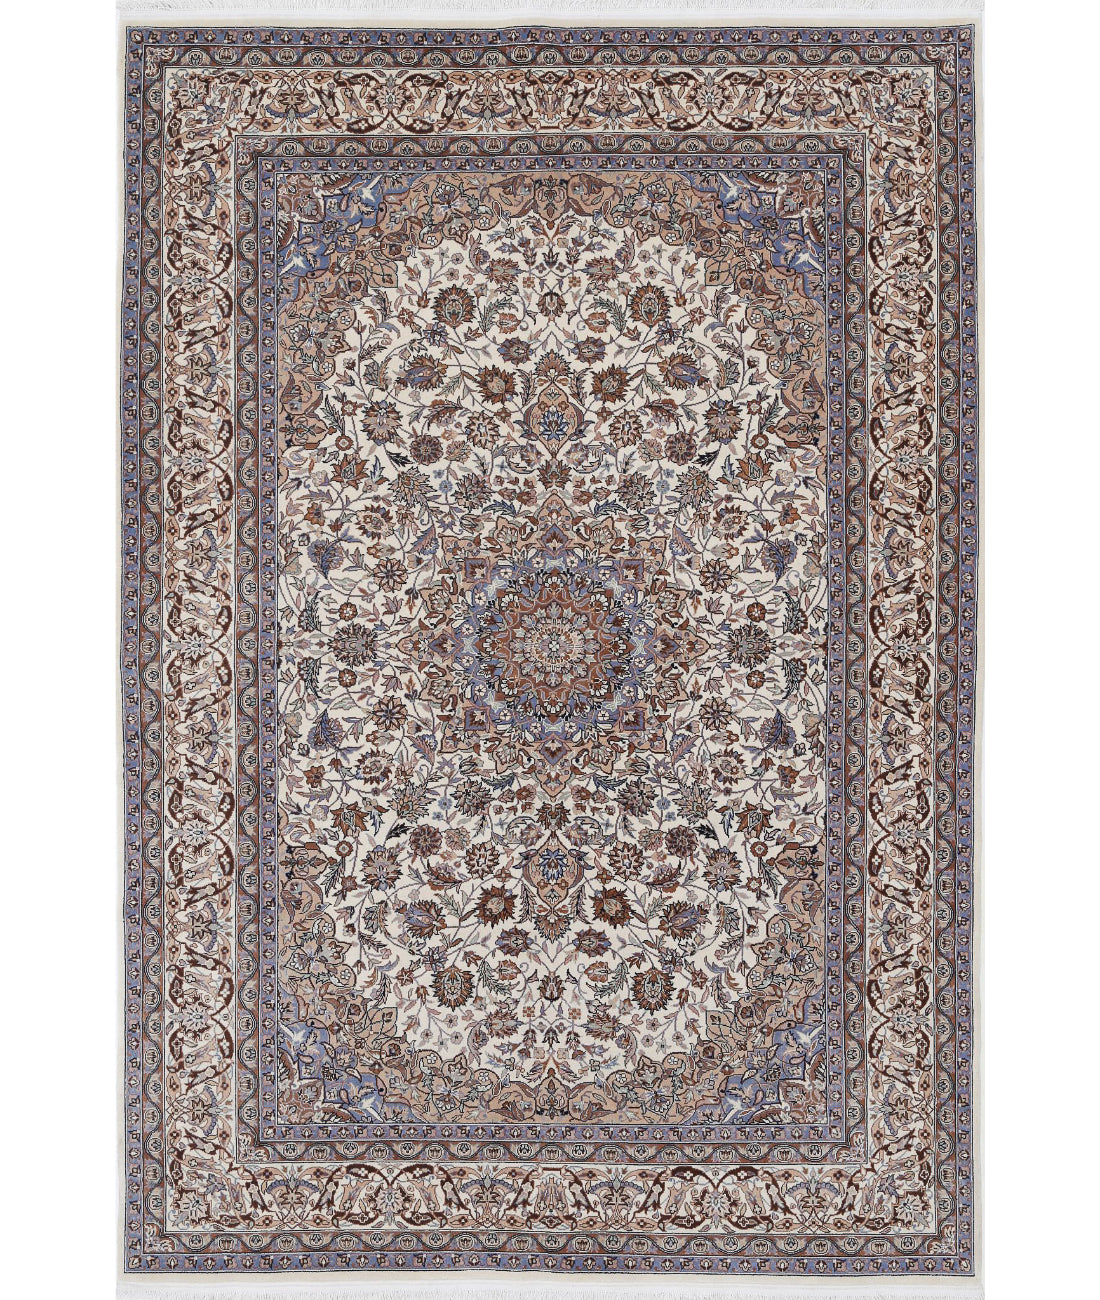 Heritage-hand-knotted-pak-persian-wool-rug-5025316.jpg